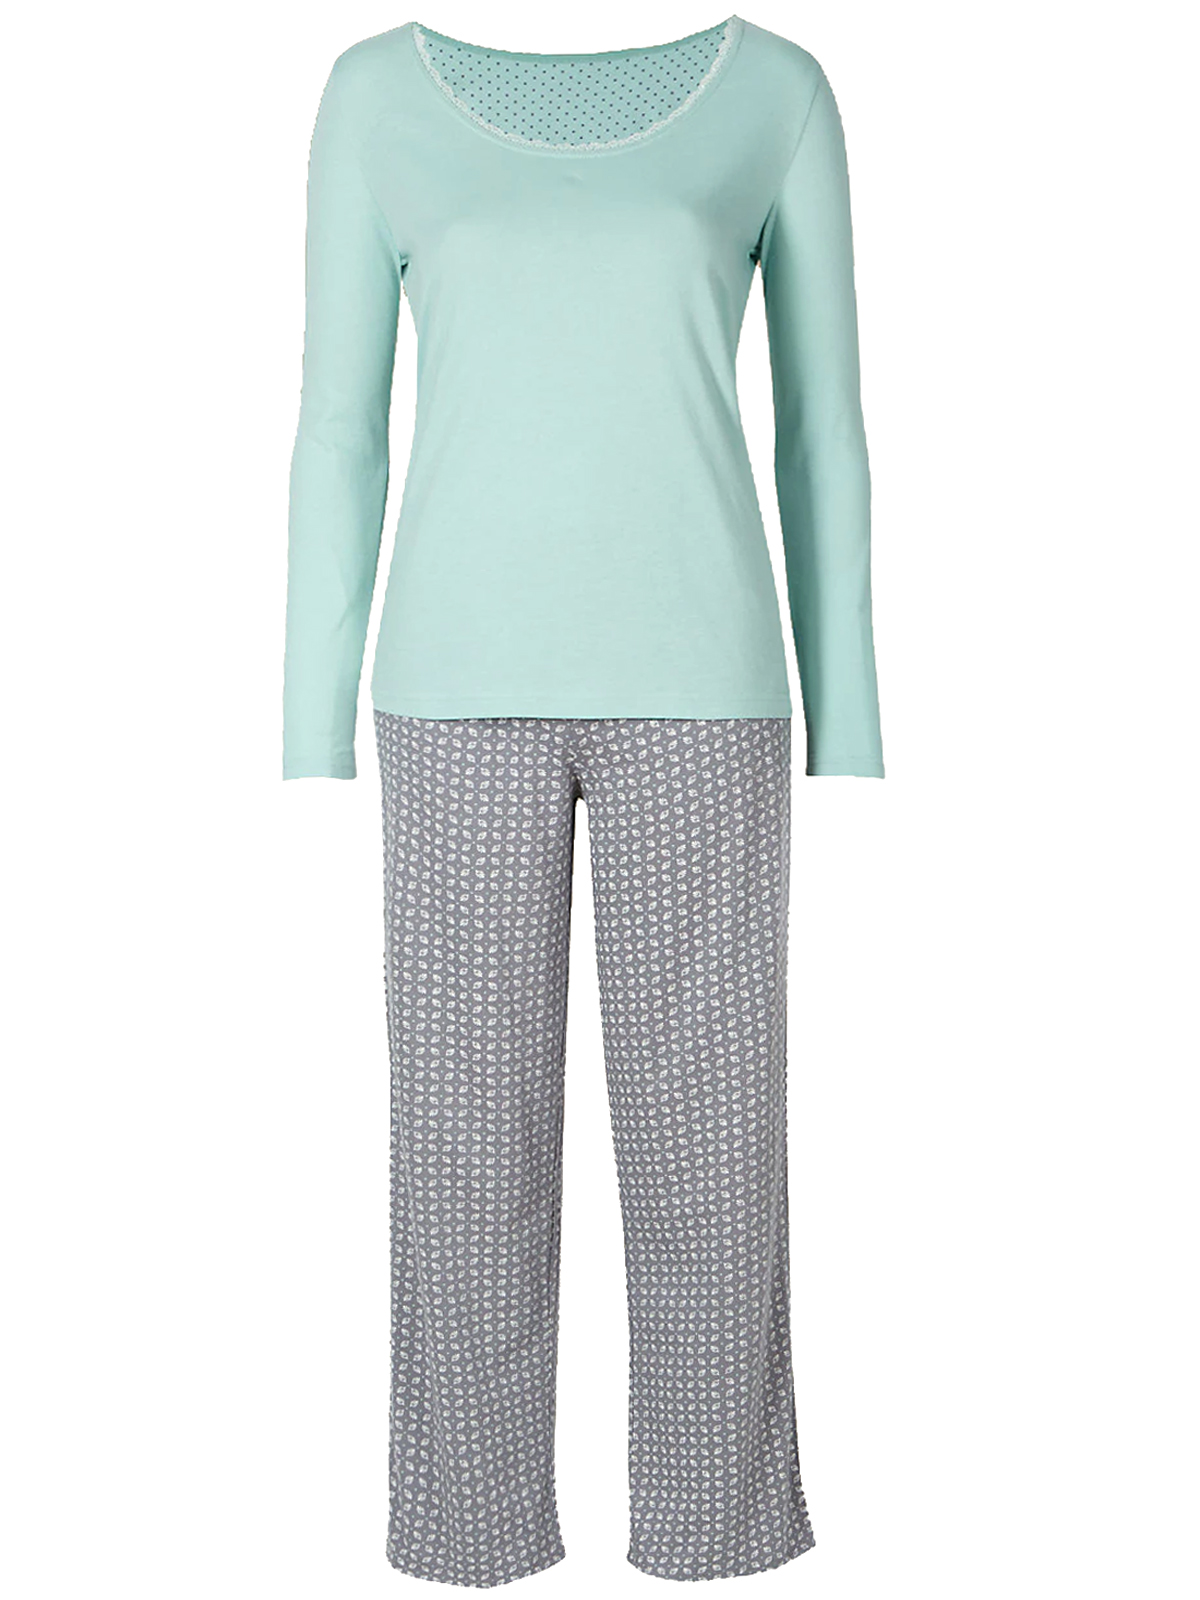 Marks and Spencer - - M&5 GREY Pure Cotton Geo Print Pyjamas - Size 12/14